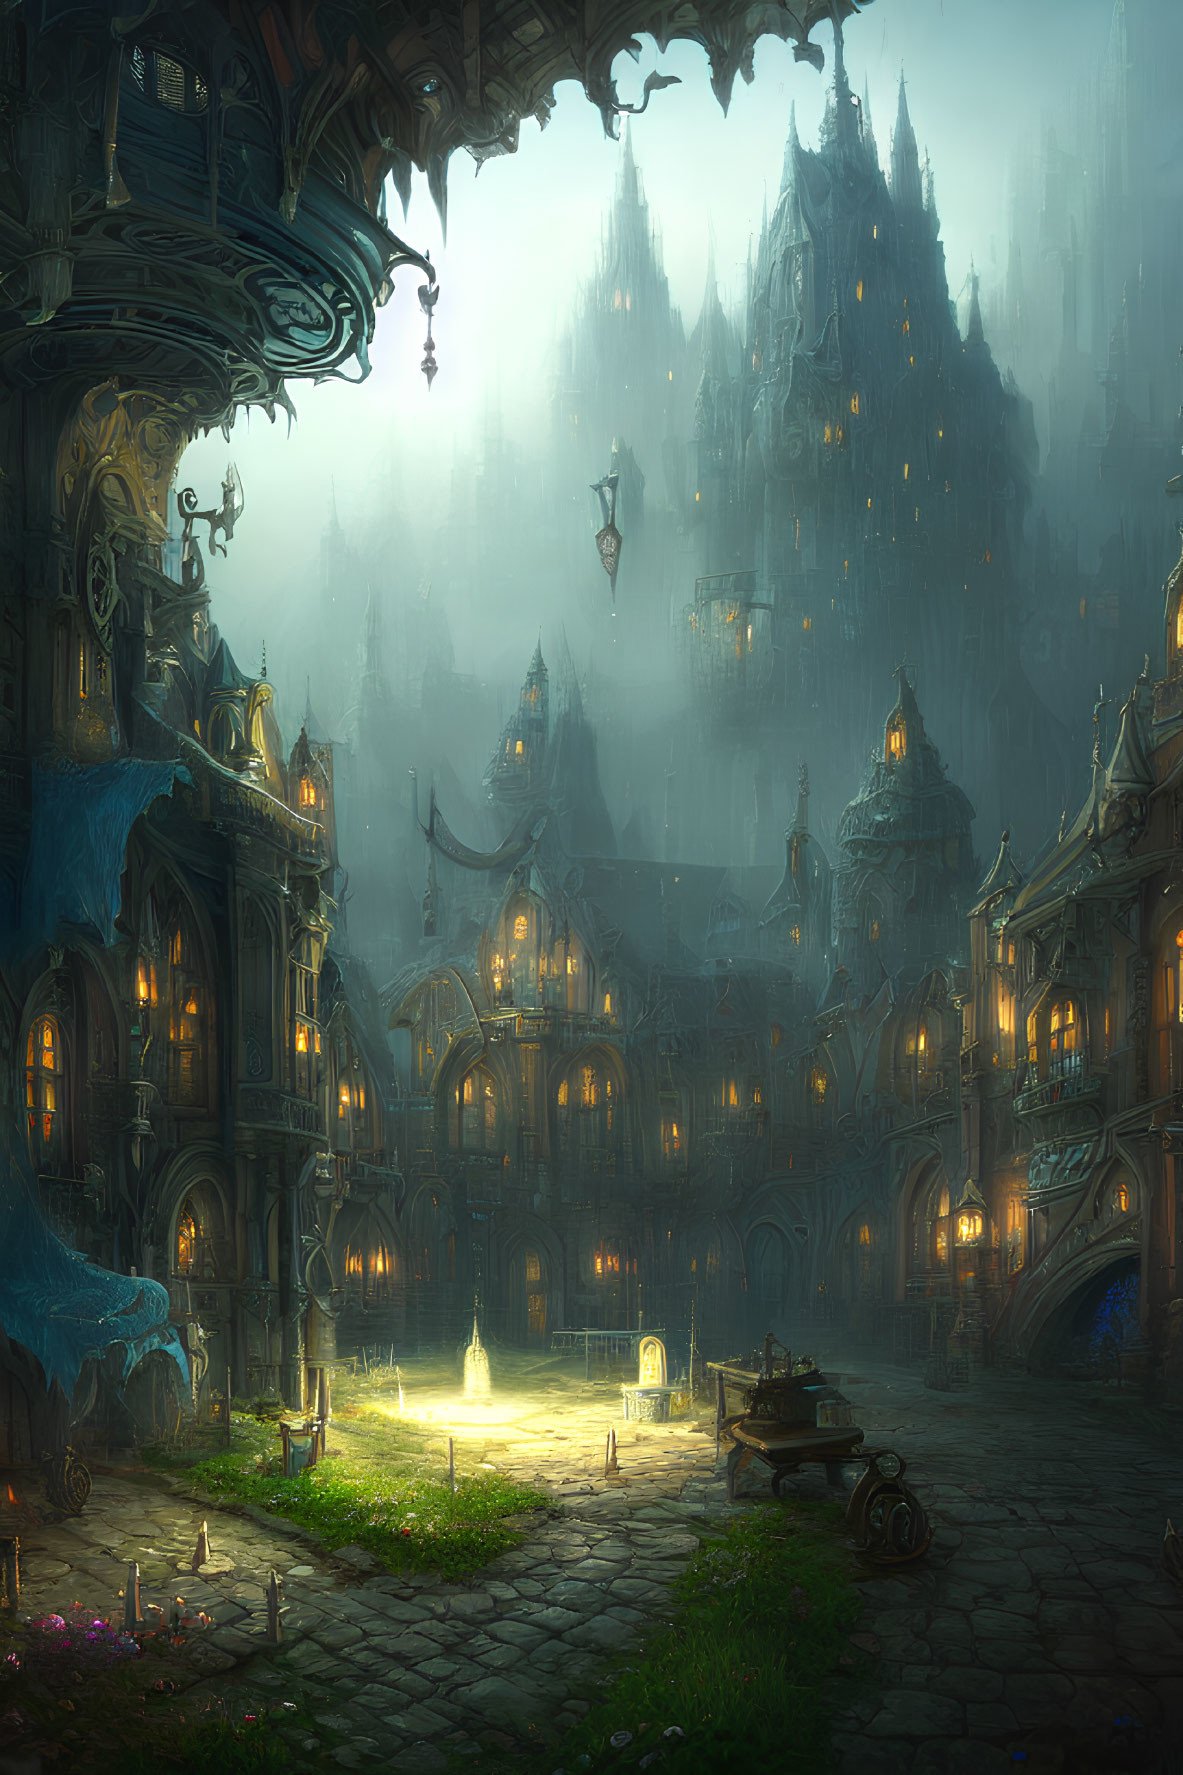 Mystical Gothic cityscape at dusk with lanterns